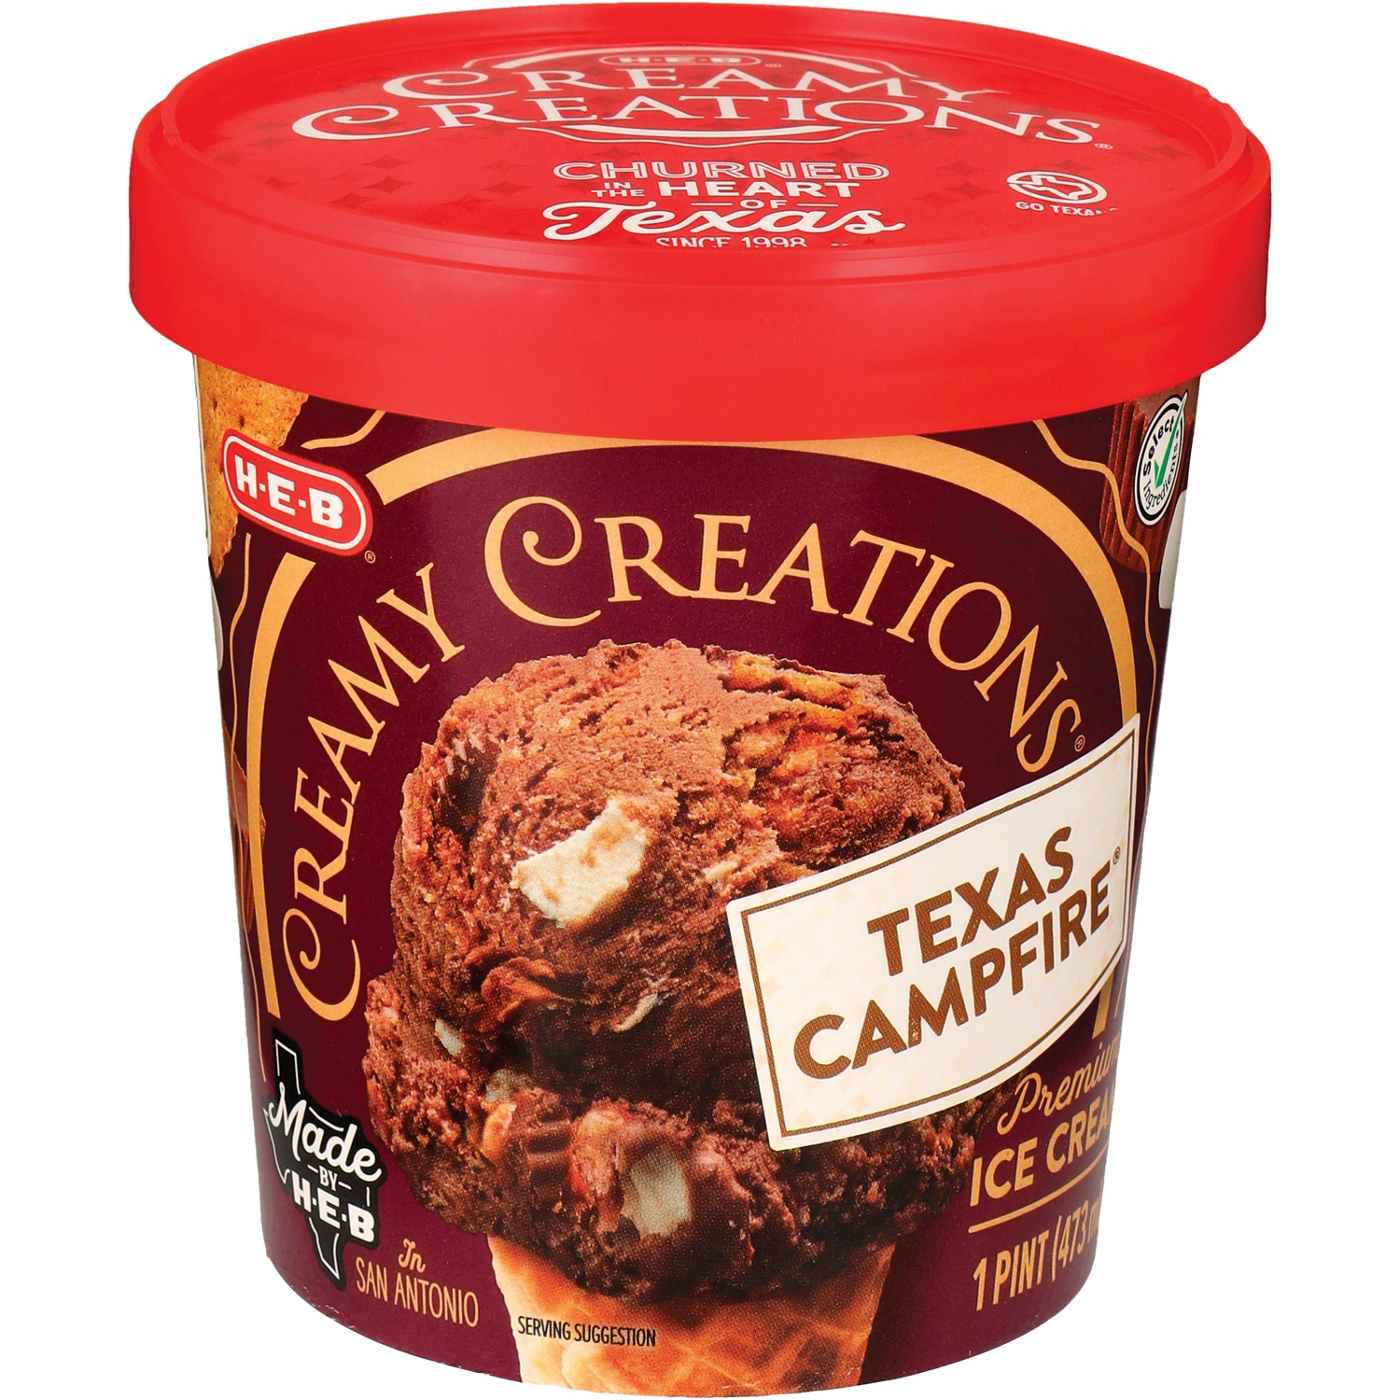 H-E-B Creamy Creations Texas Campfire Ice Cream; image 1 of 2